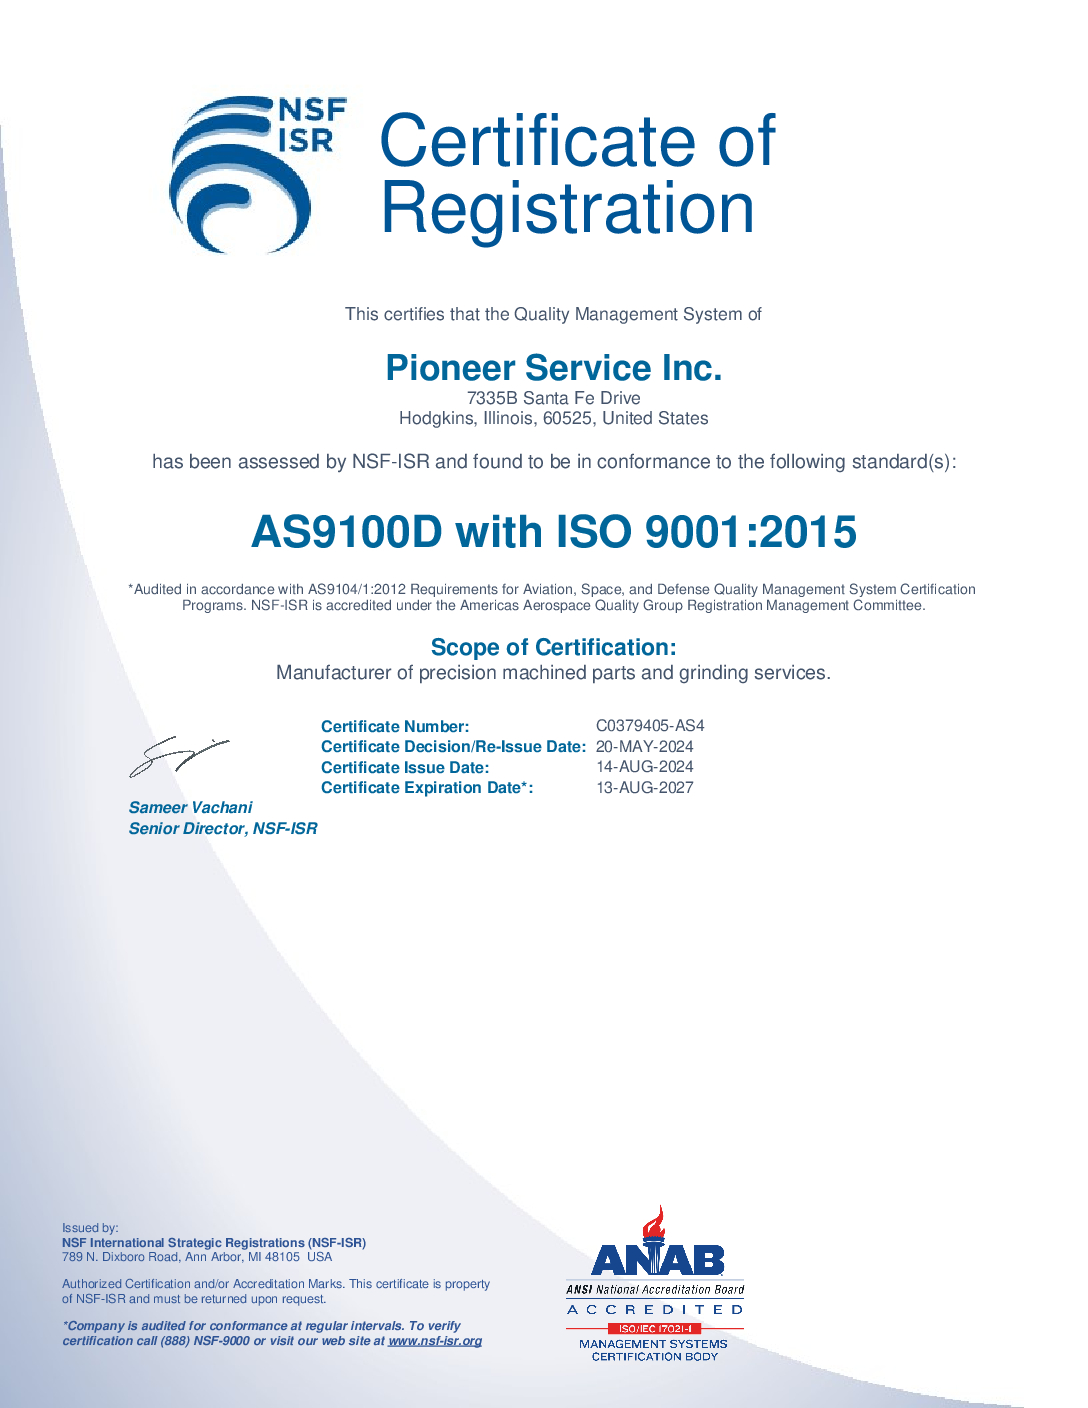 Pioneer Service Inc Certification